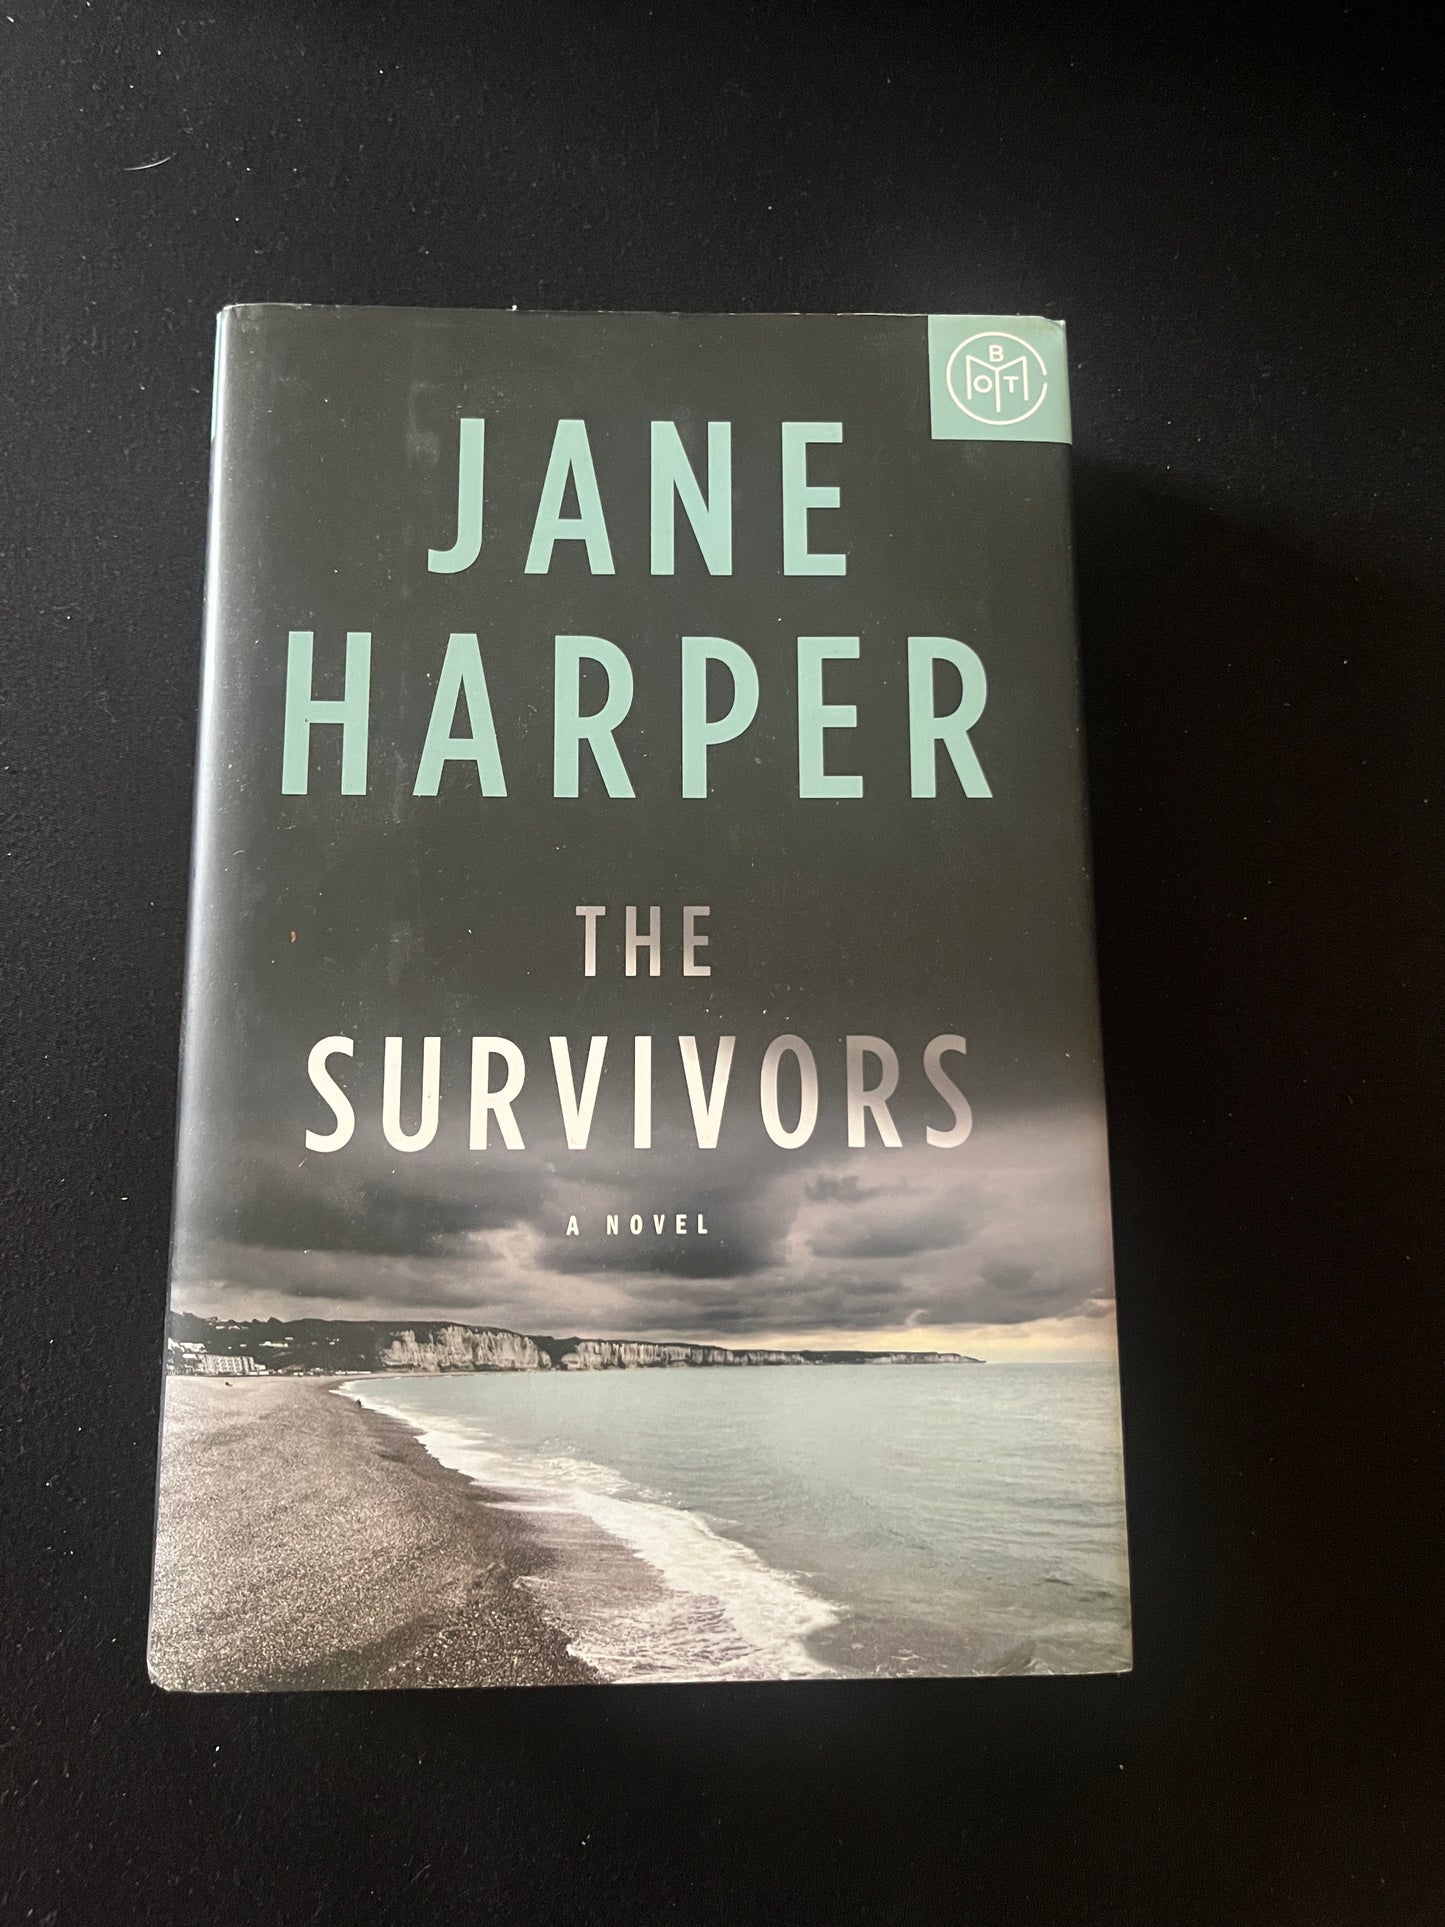 THE SURVIVORS by Jane Harper